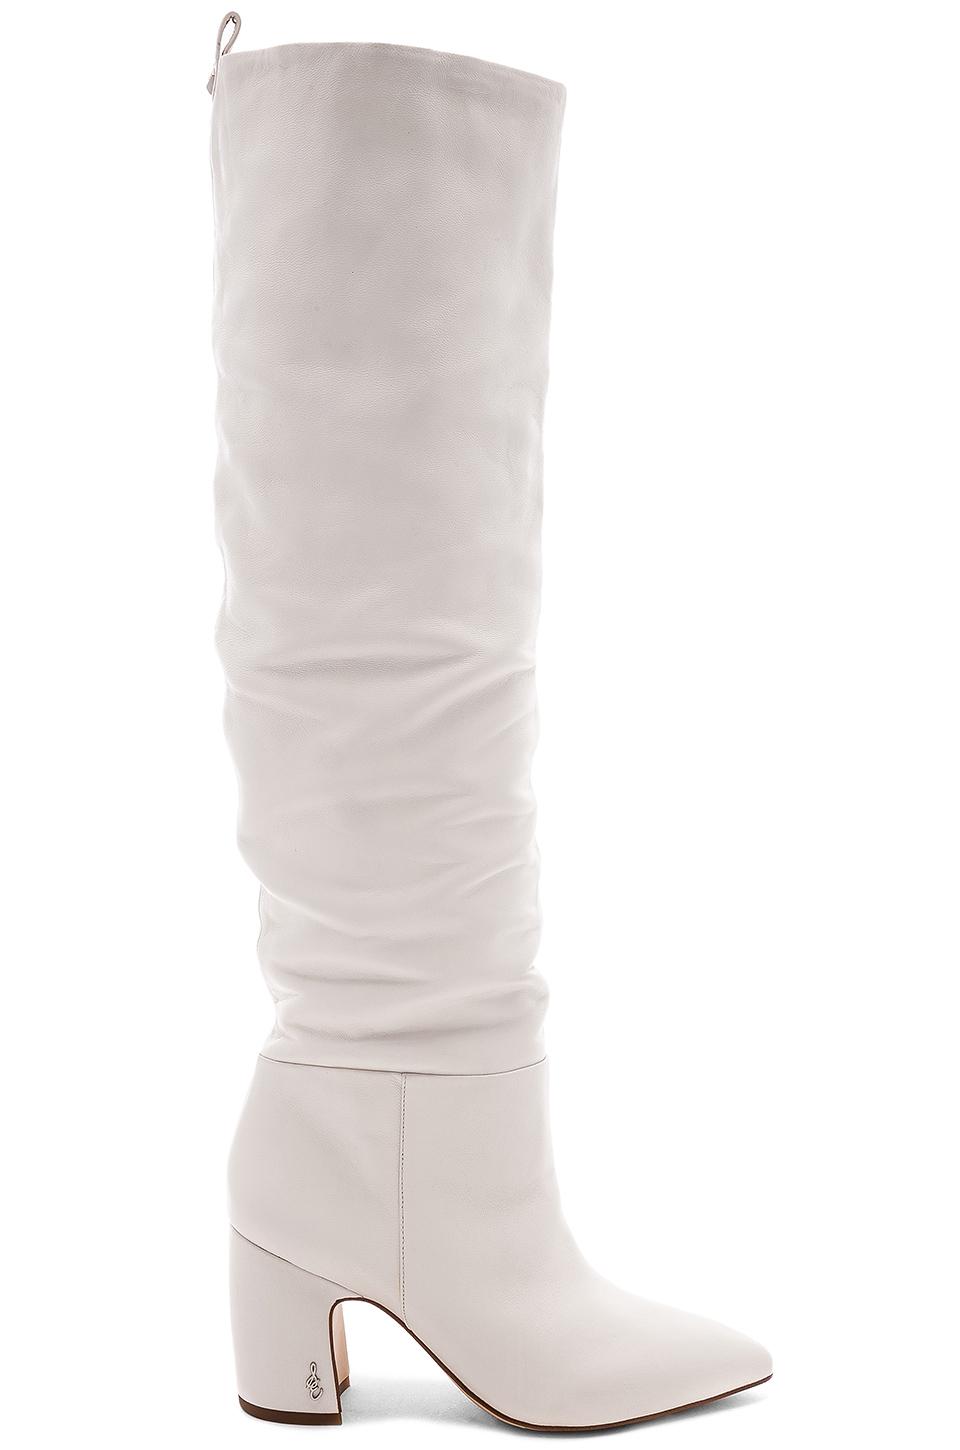 Sam Edelman Leather Hutton Boot in Bright White (White) - Lyst